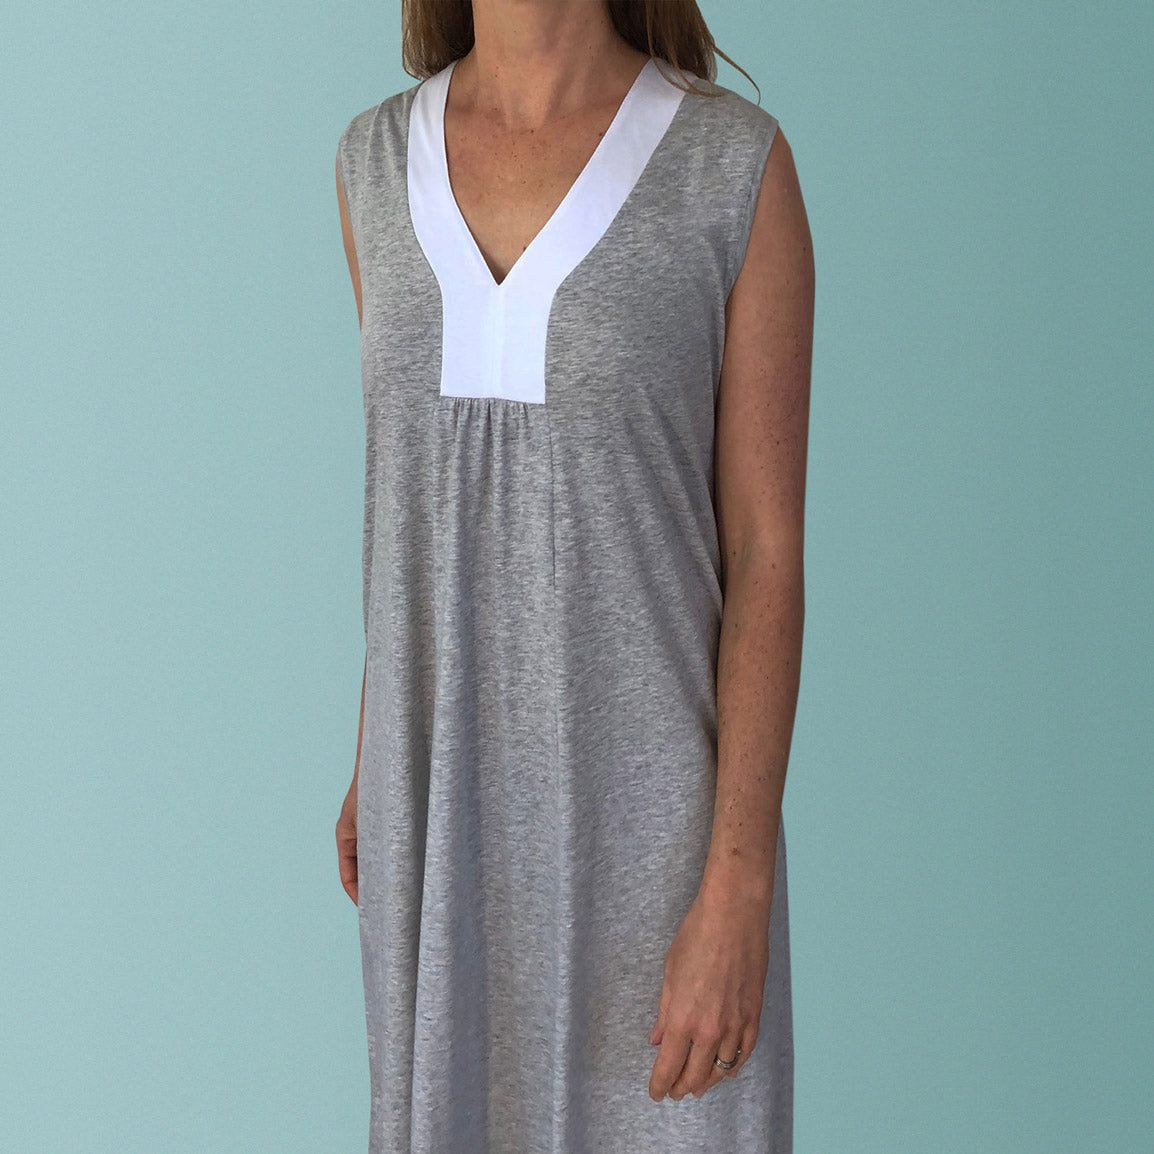 Australian sleepwear. Plus size nighties Australia. Summer nightie in soft white and grey organic cotton jersey. Ethical sleepwear.